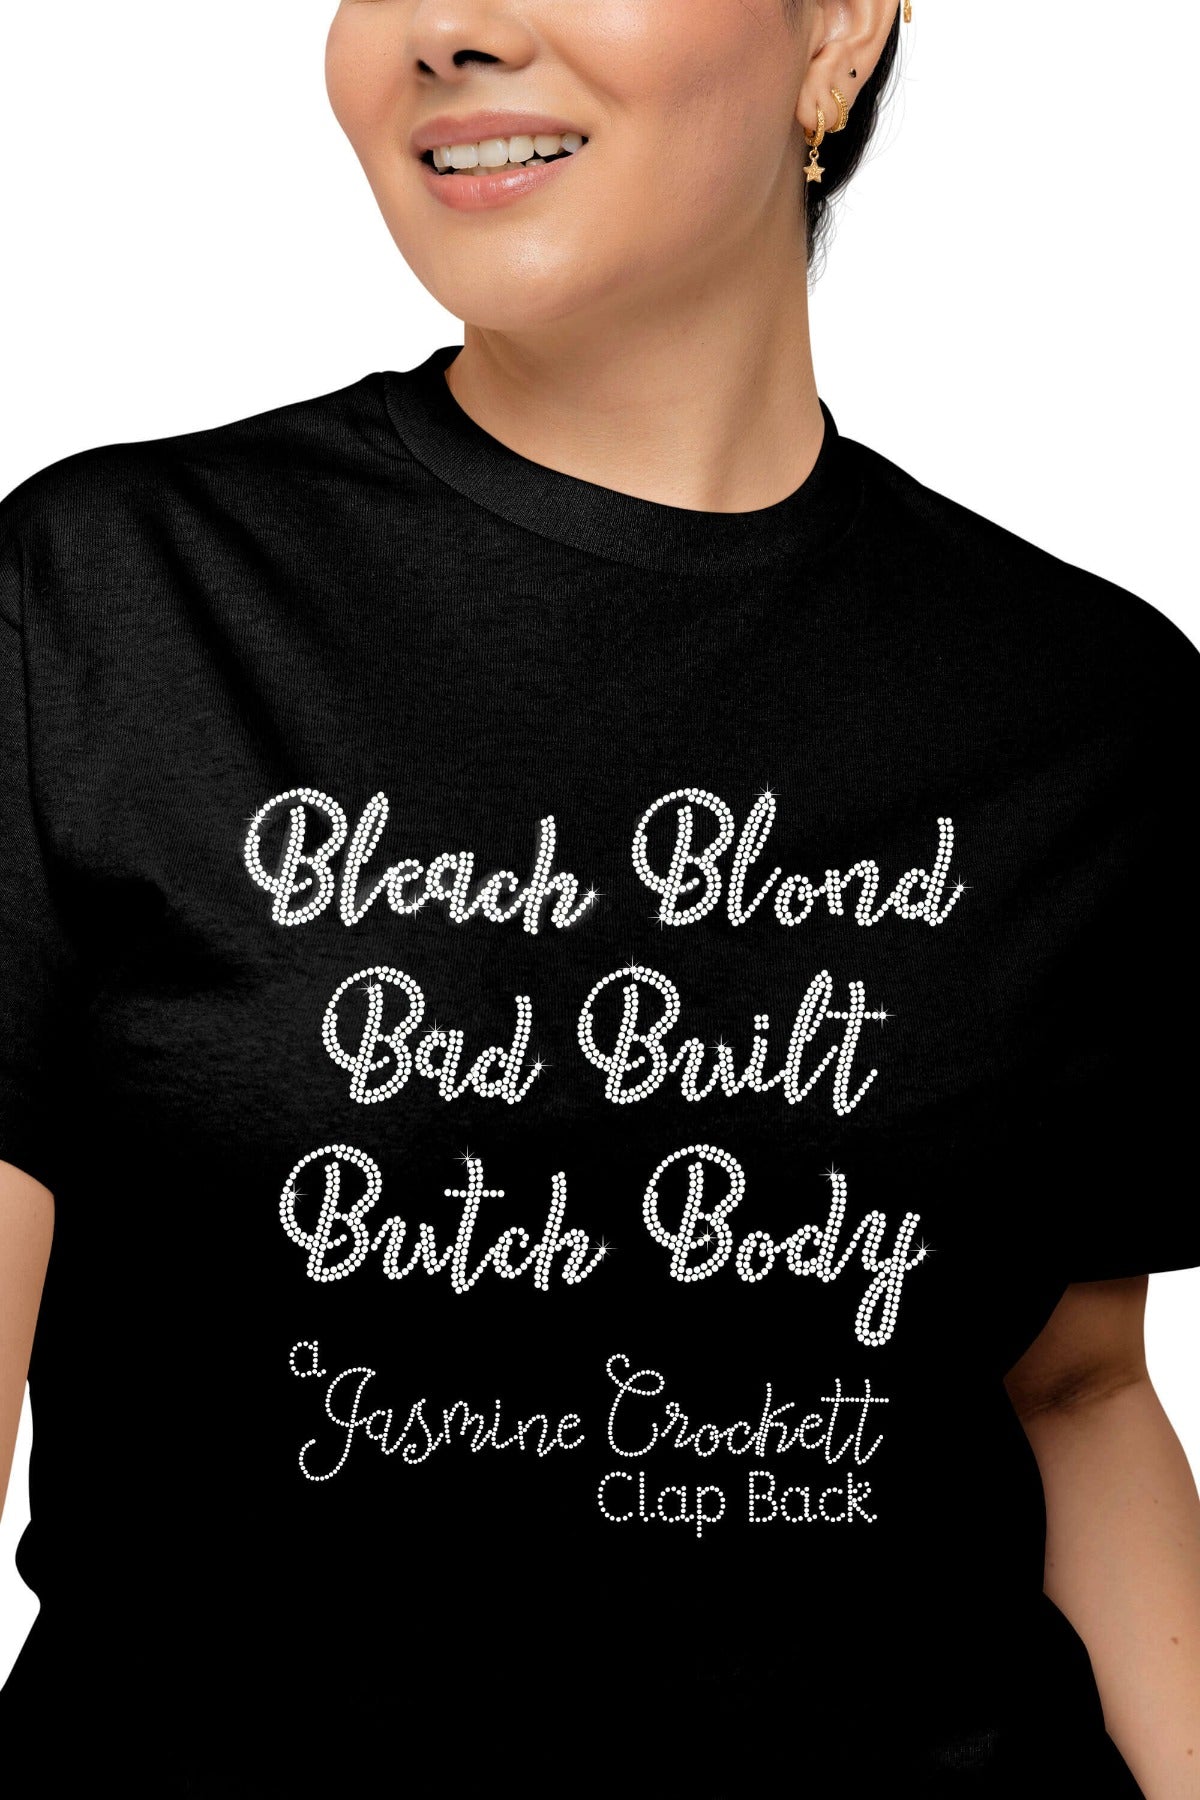 Bleach Blond Bad Built Butch Body Rhinestone T-Shirt